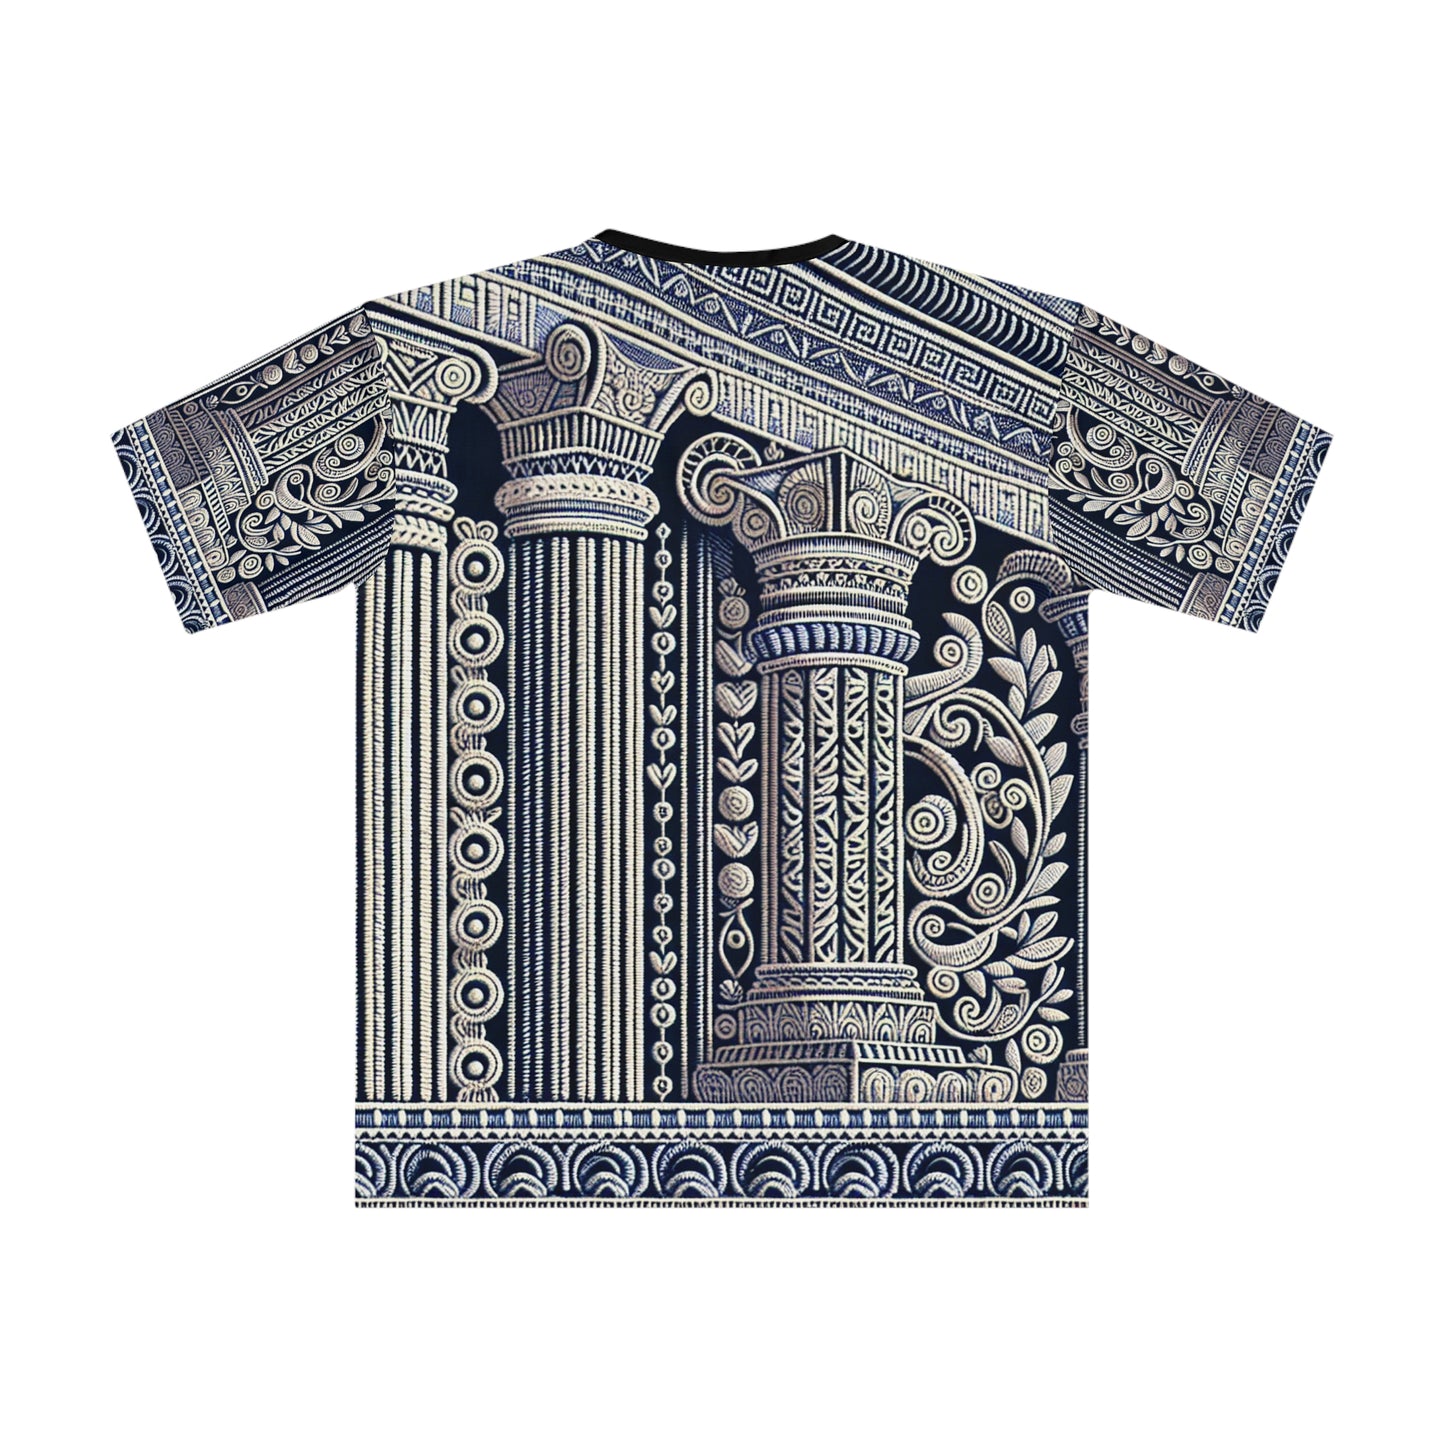 Athenian Quill Men's T-shirt